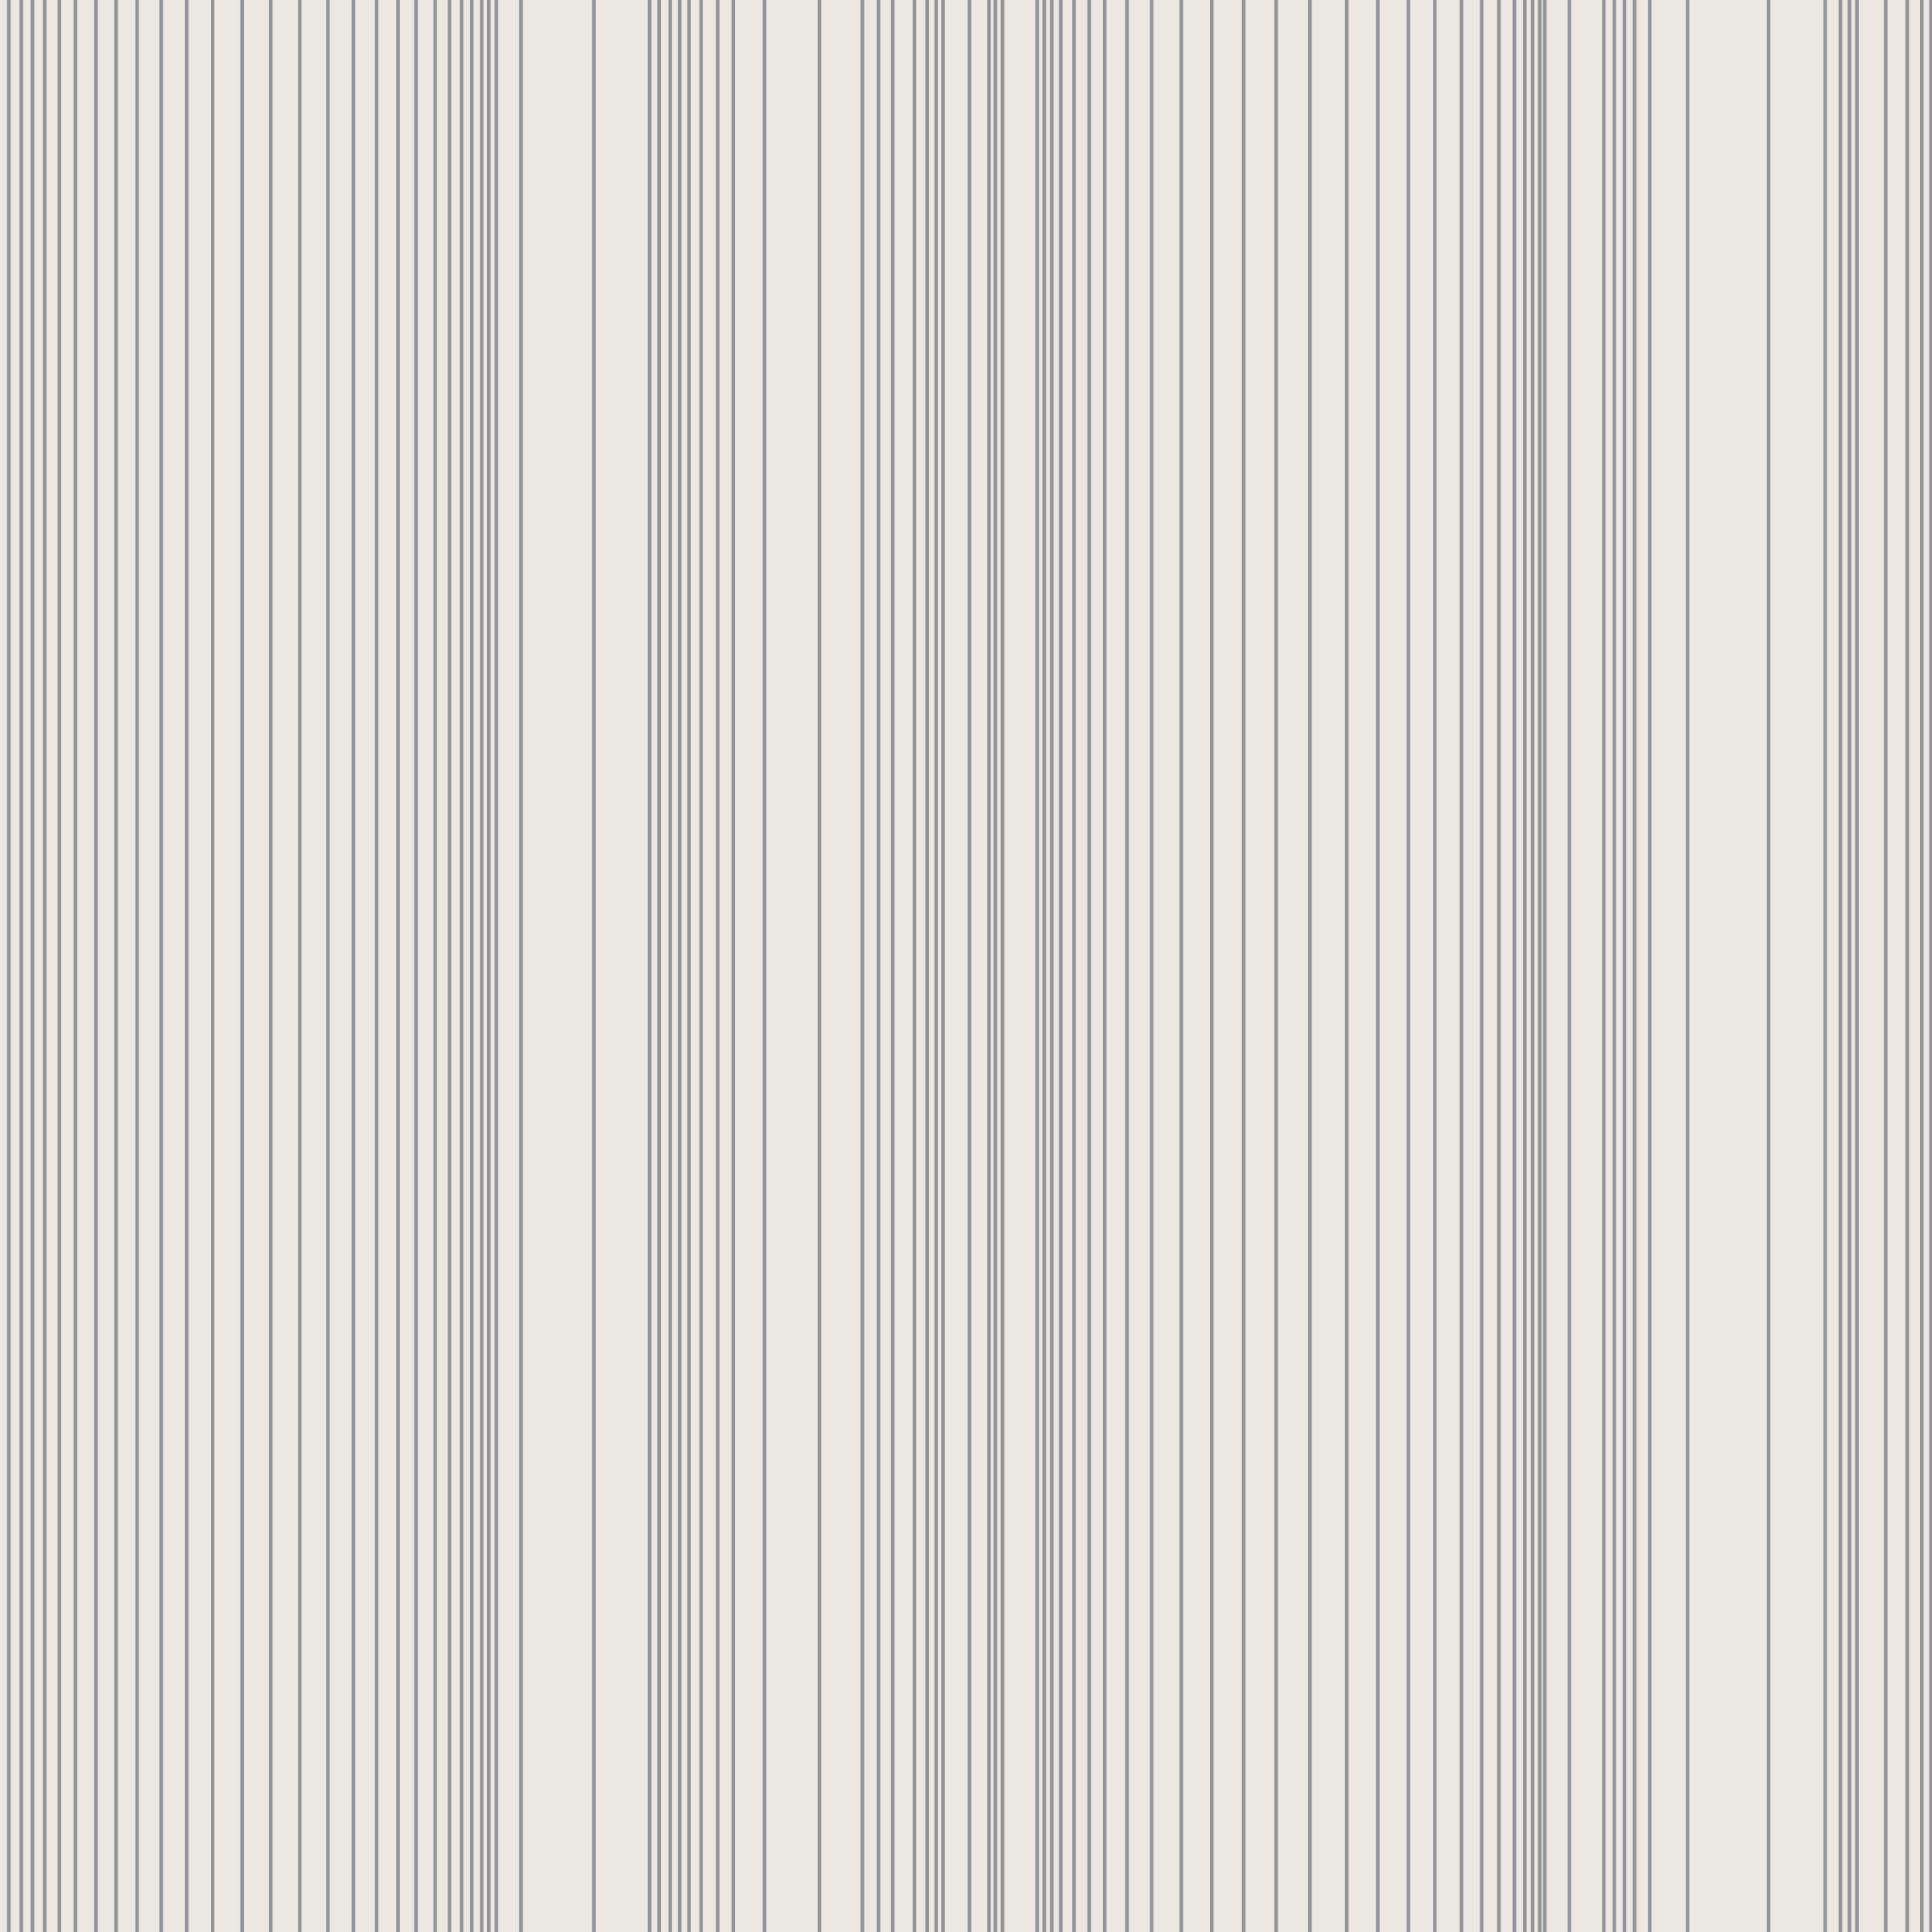 Encoded Stripe - Gray (Copy)